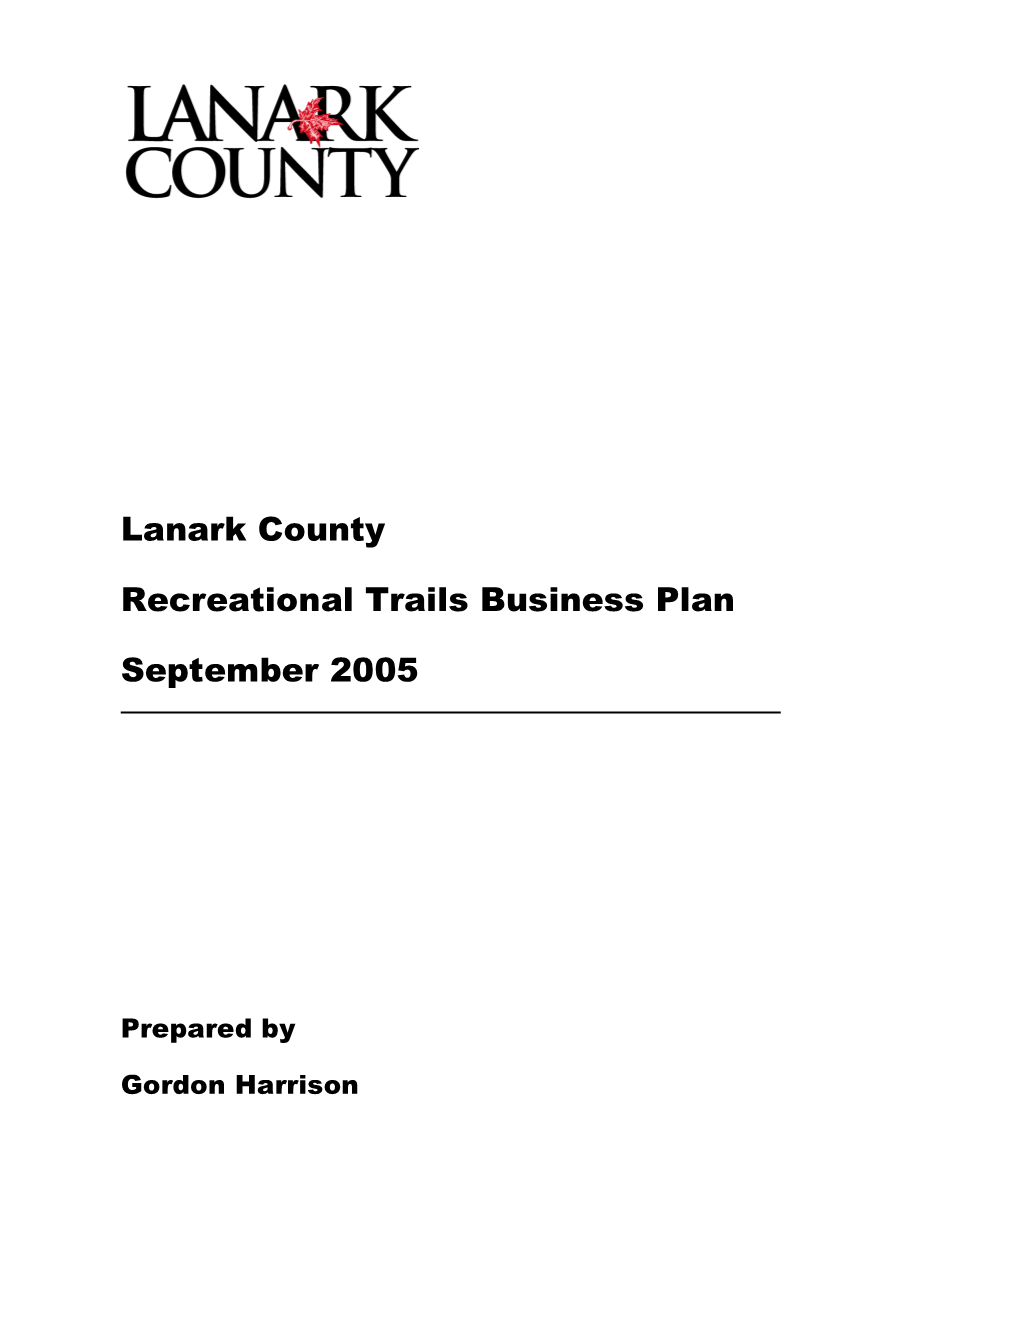 Lanark County Recreational Trails Business Plan September 2005